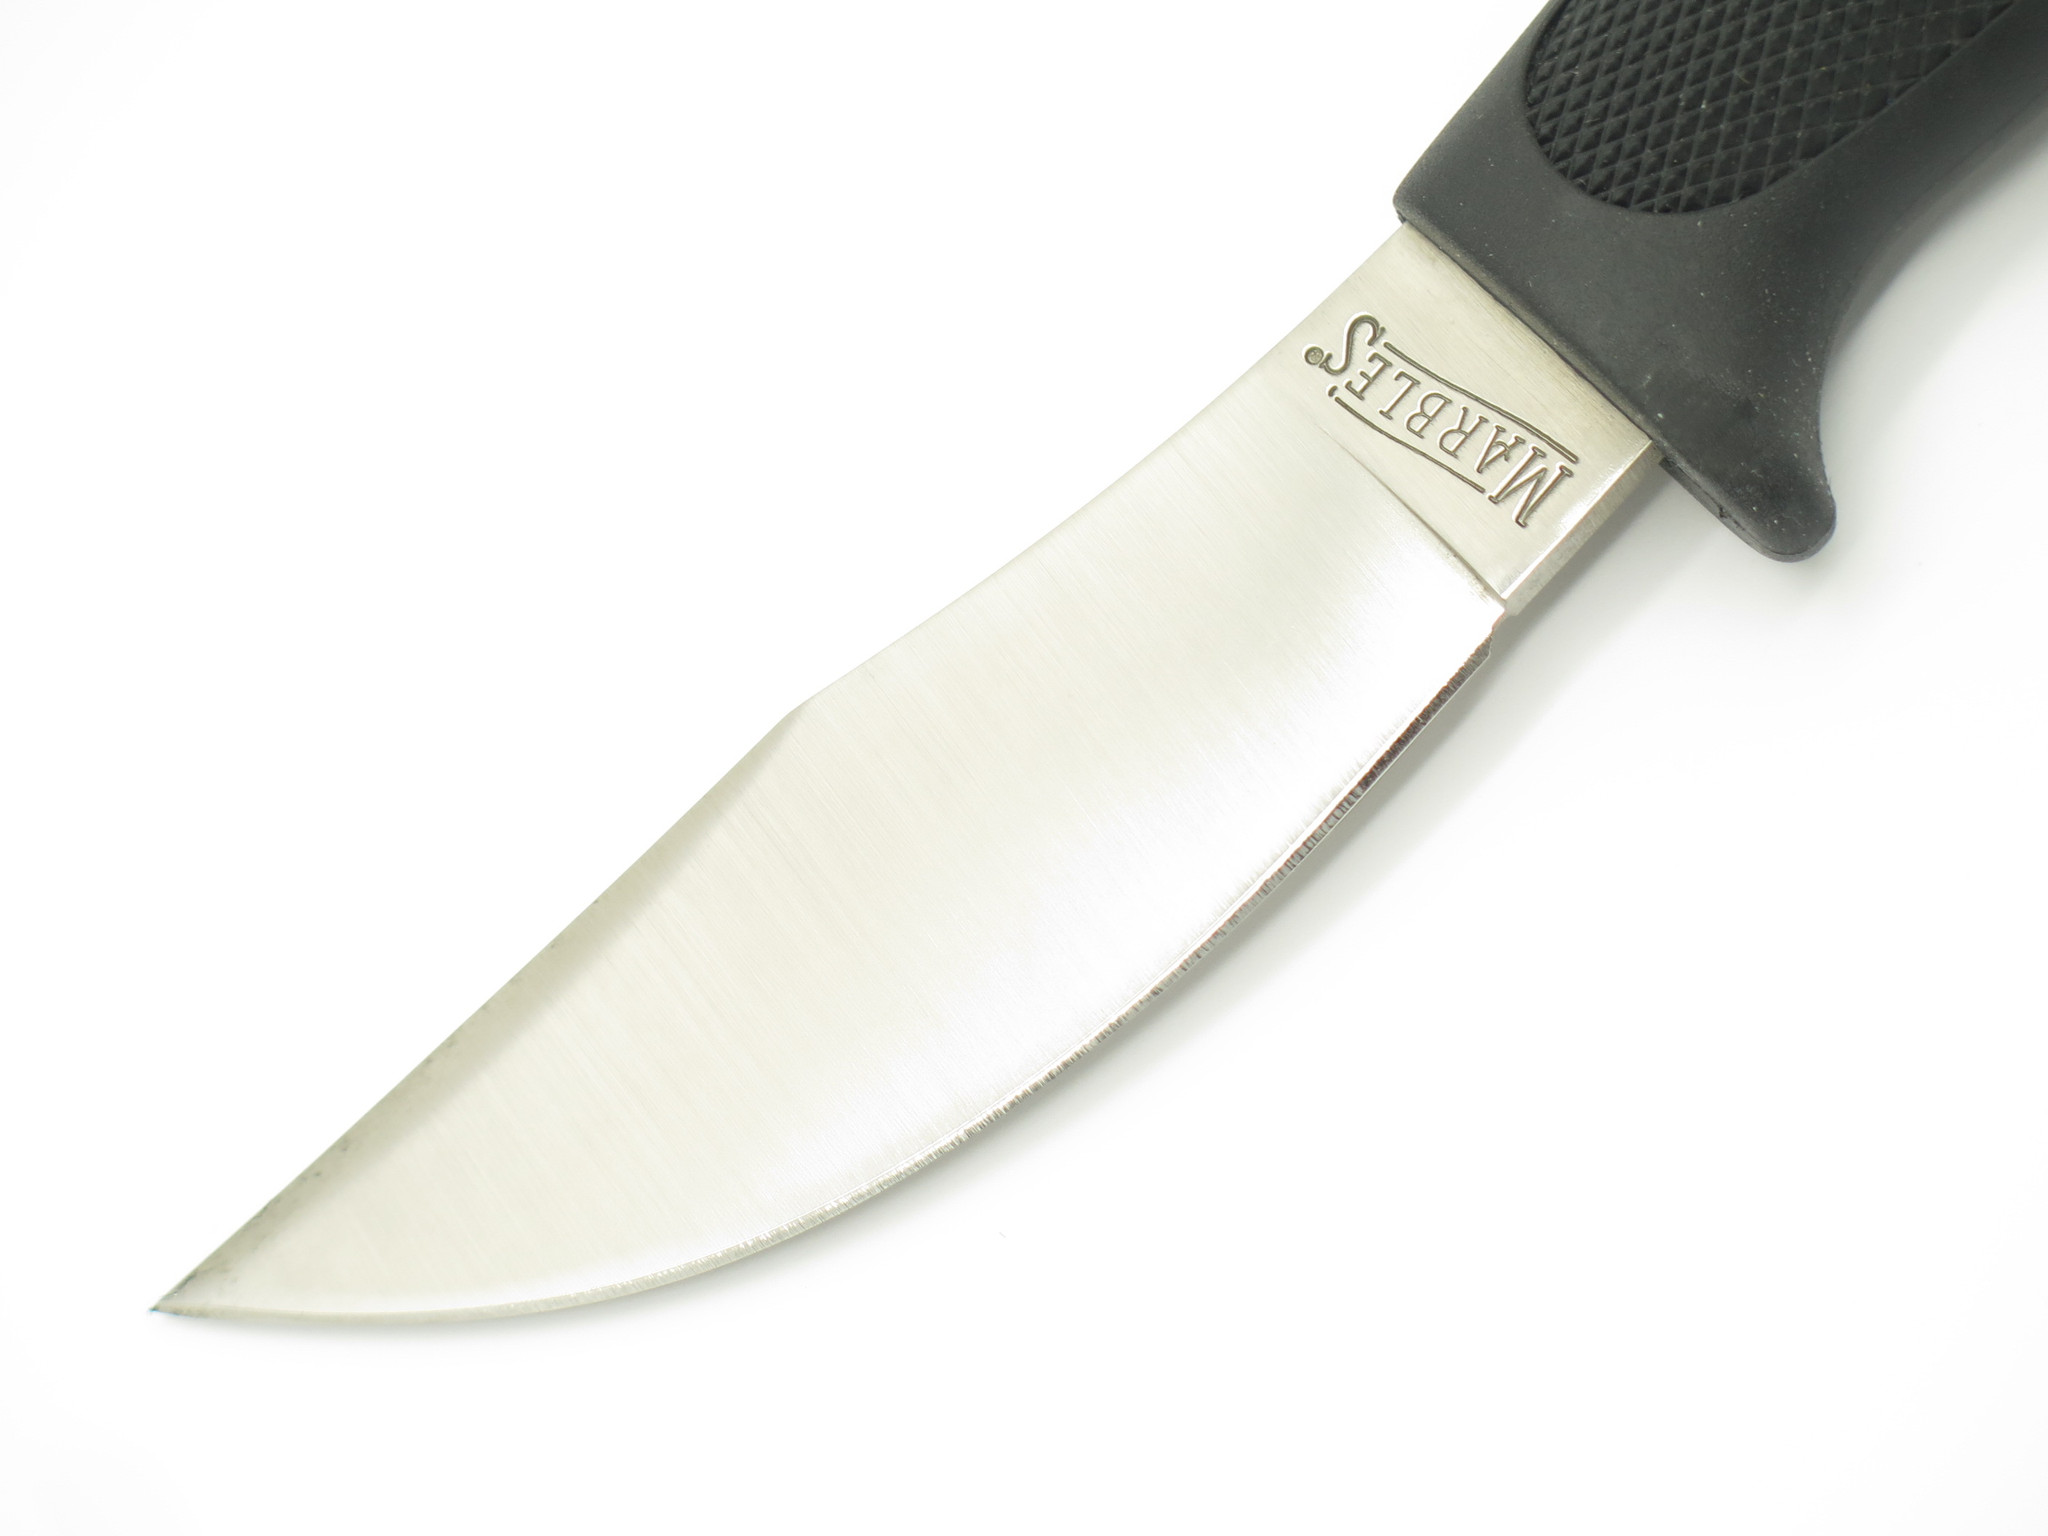  Hattori Seki Japan Custom 10 Inch Fixed Blade Hunting Knife  Black Nylon Sheath Vintage Old Stock : Sports & Outdoors